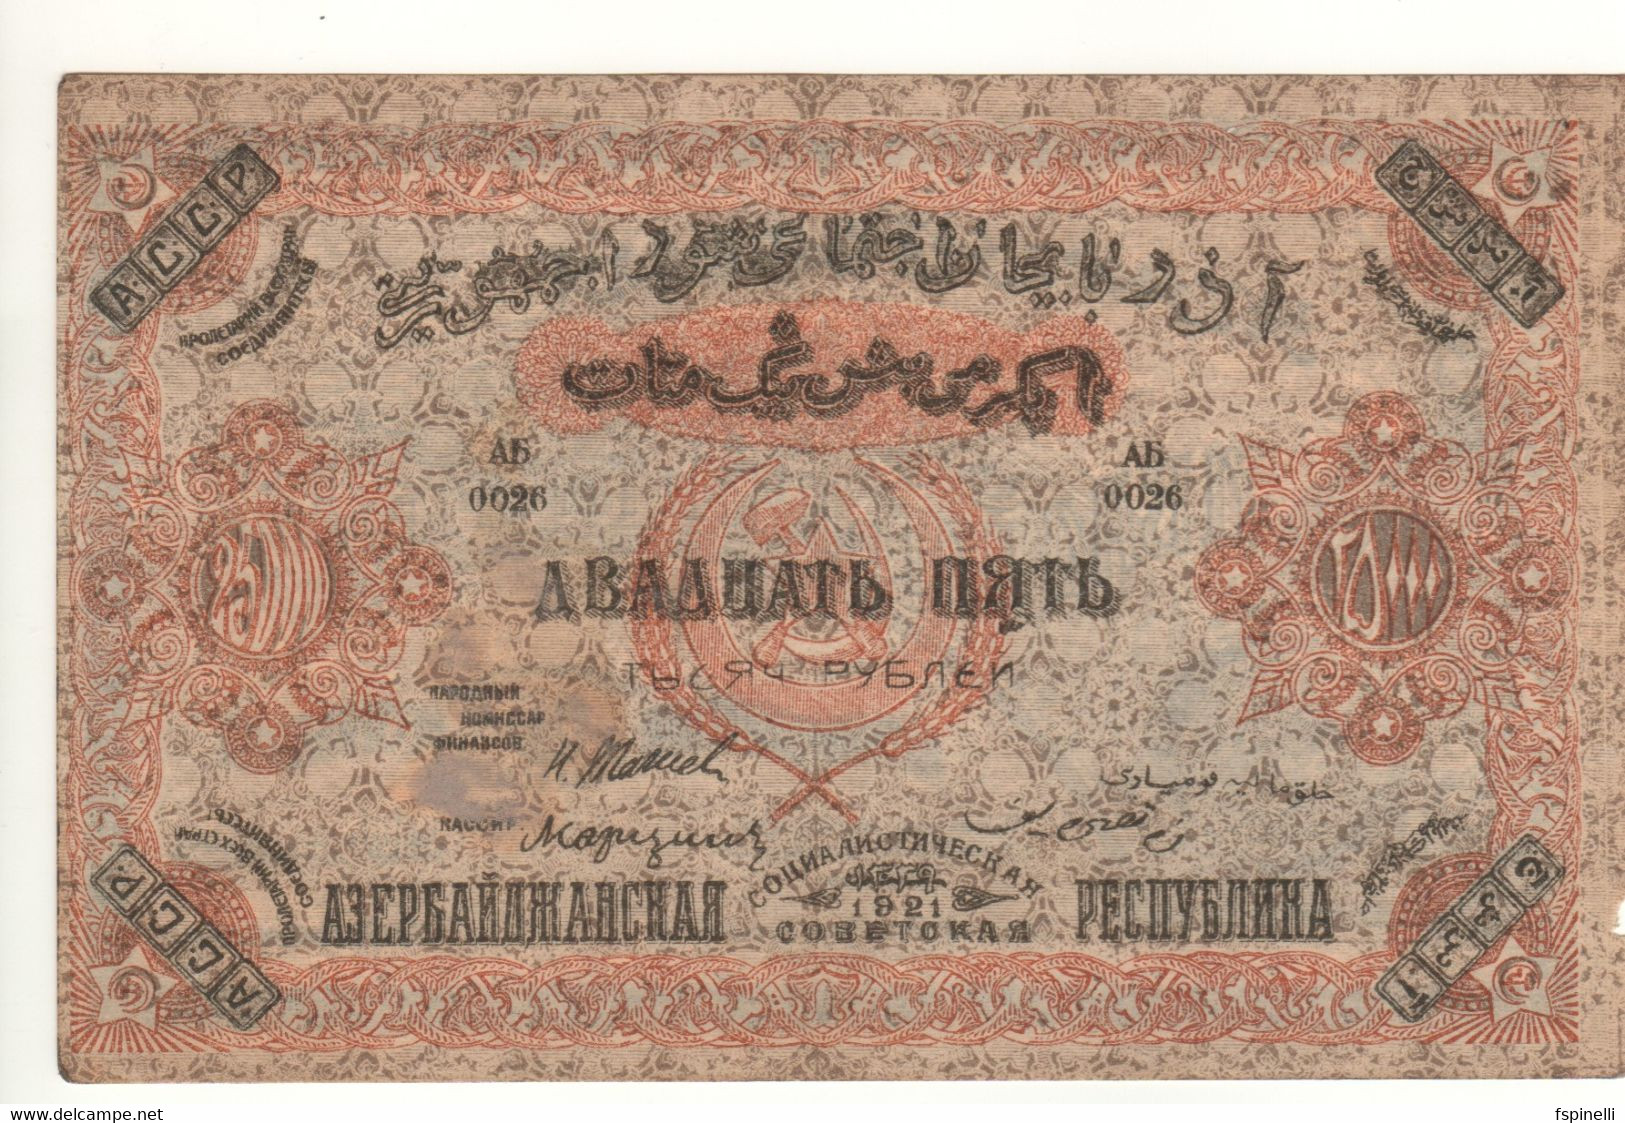 AZERBAIJAN  25'000 Rubley/Manat  PS715a  1921   RUSSIA  (Socialist Soviet Republic) - Aserbaidschan